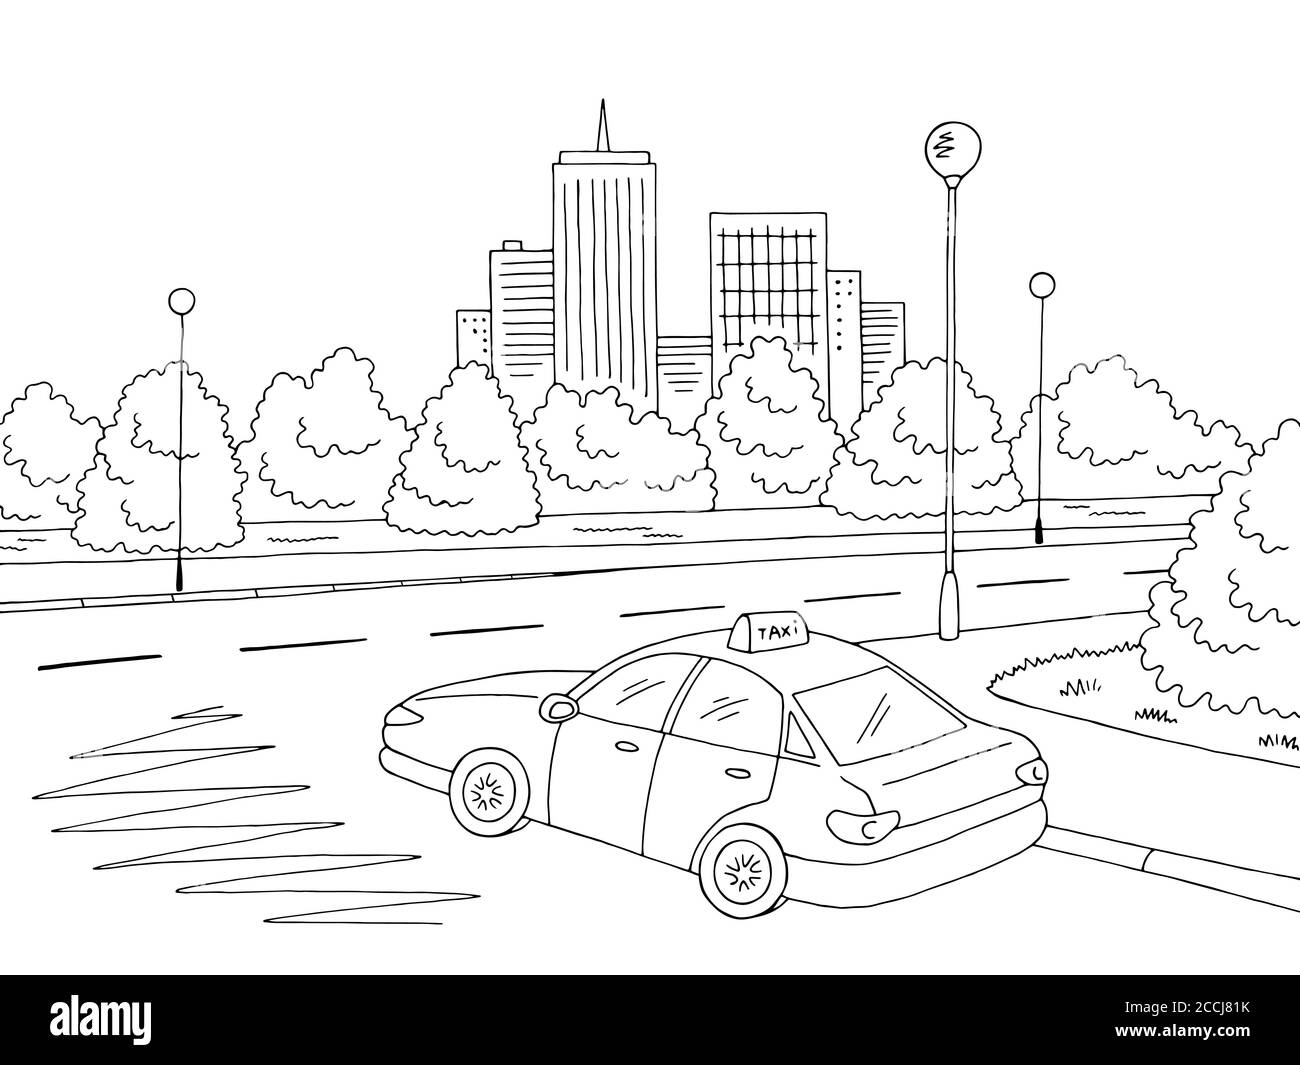 Straße Straße Grafik schwarz weiß Stadt Landschaft Skizze Illustration Vektor. Taxi Stock Vektor